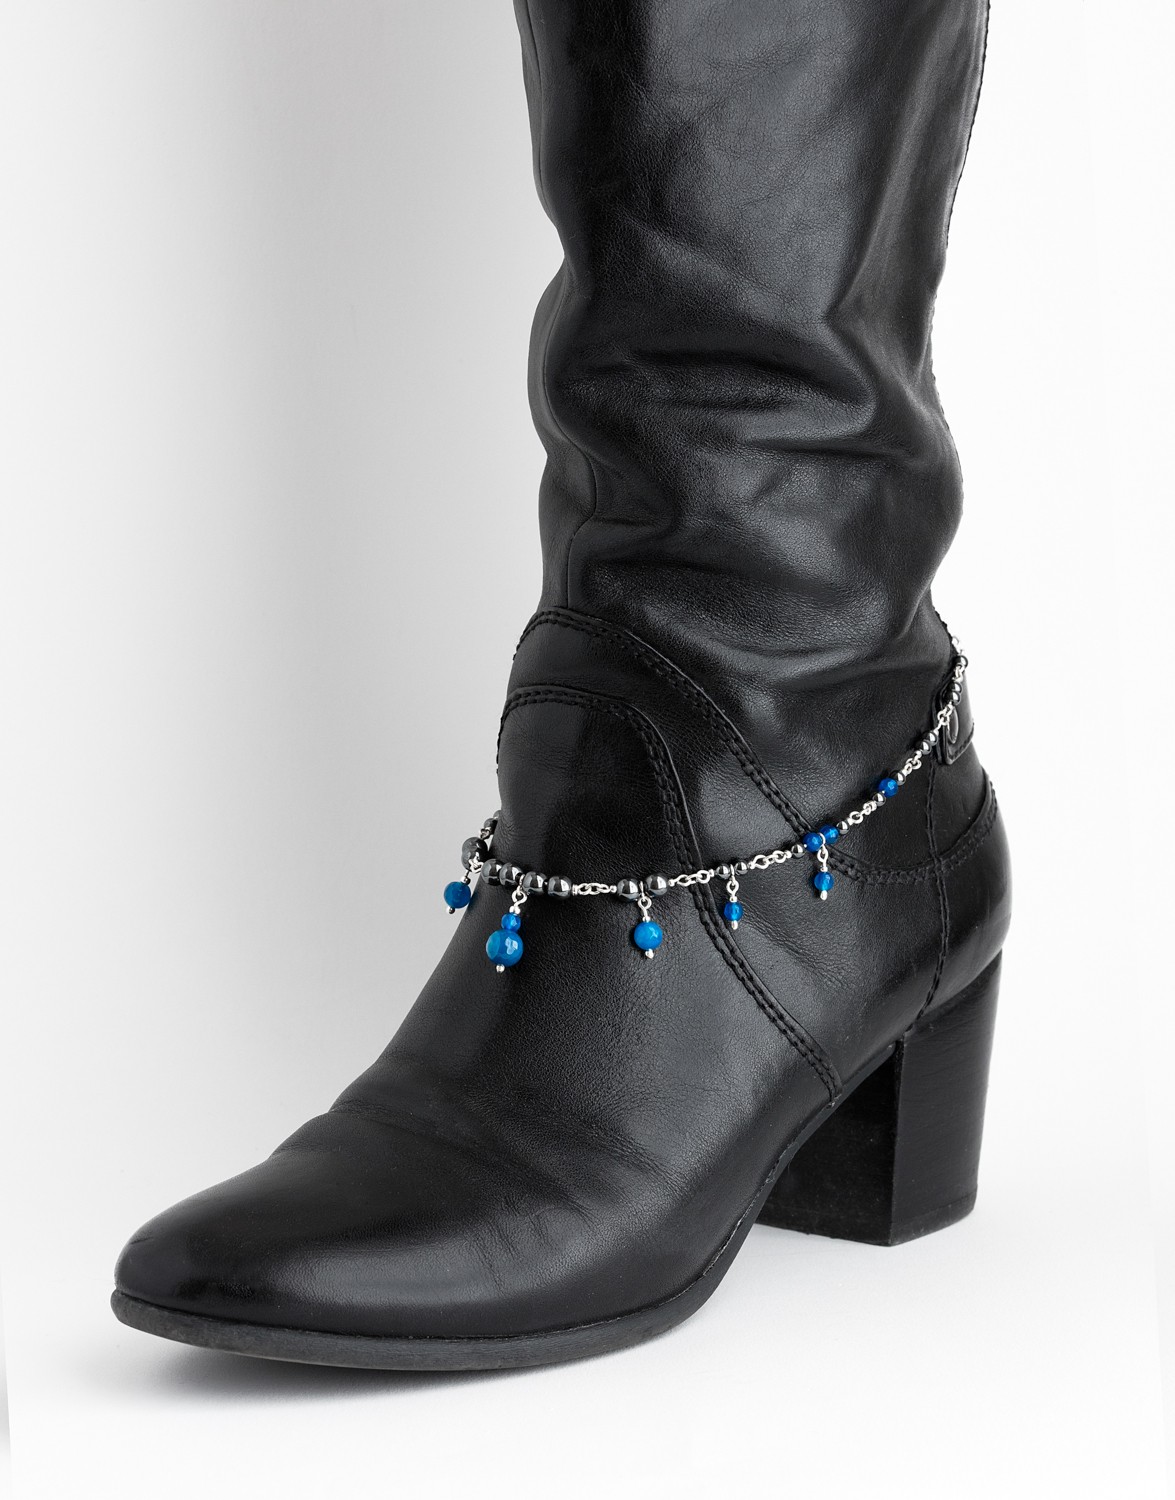 Bracelet for Boots Uranis blue Agate